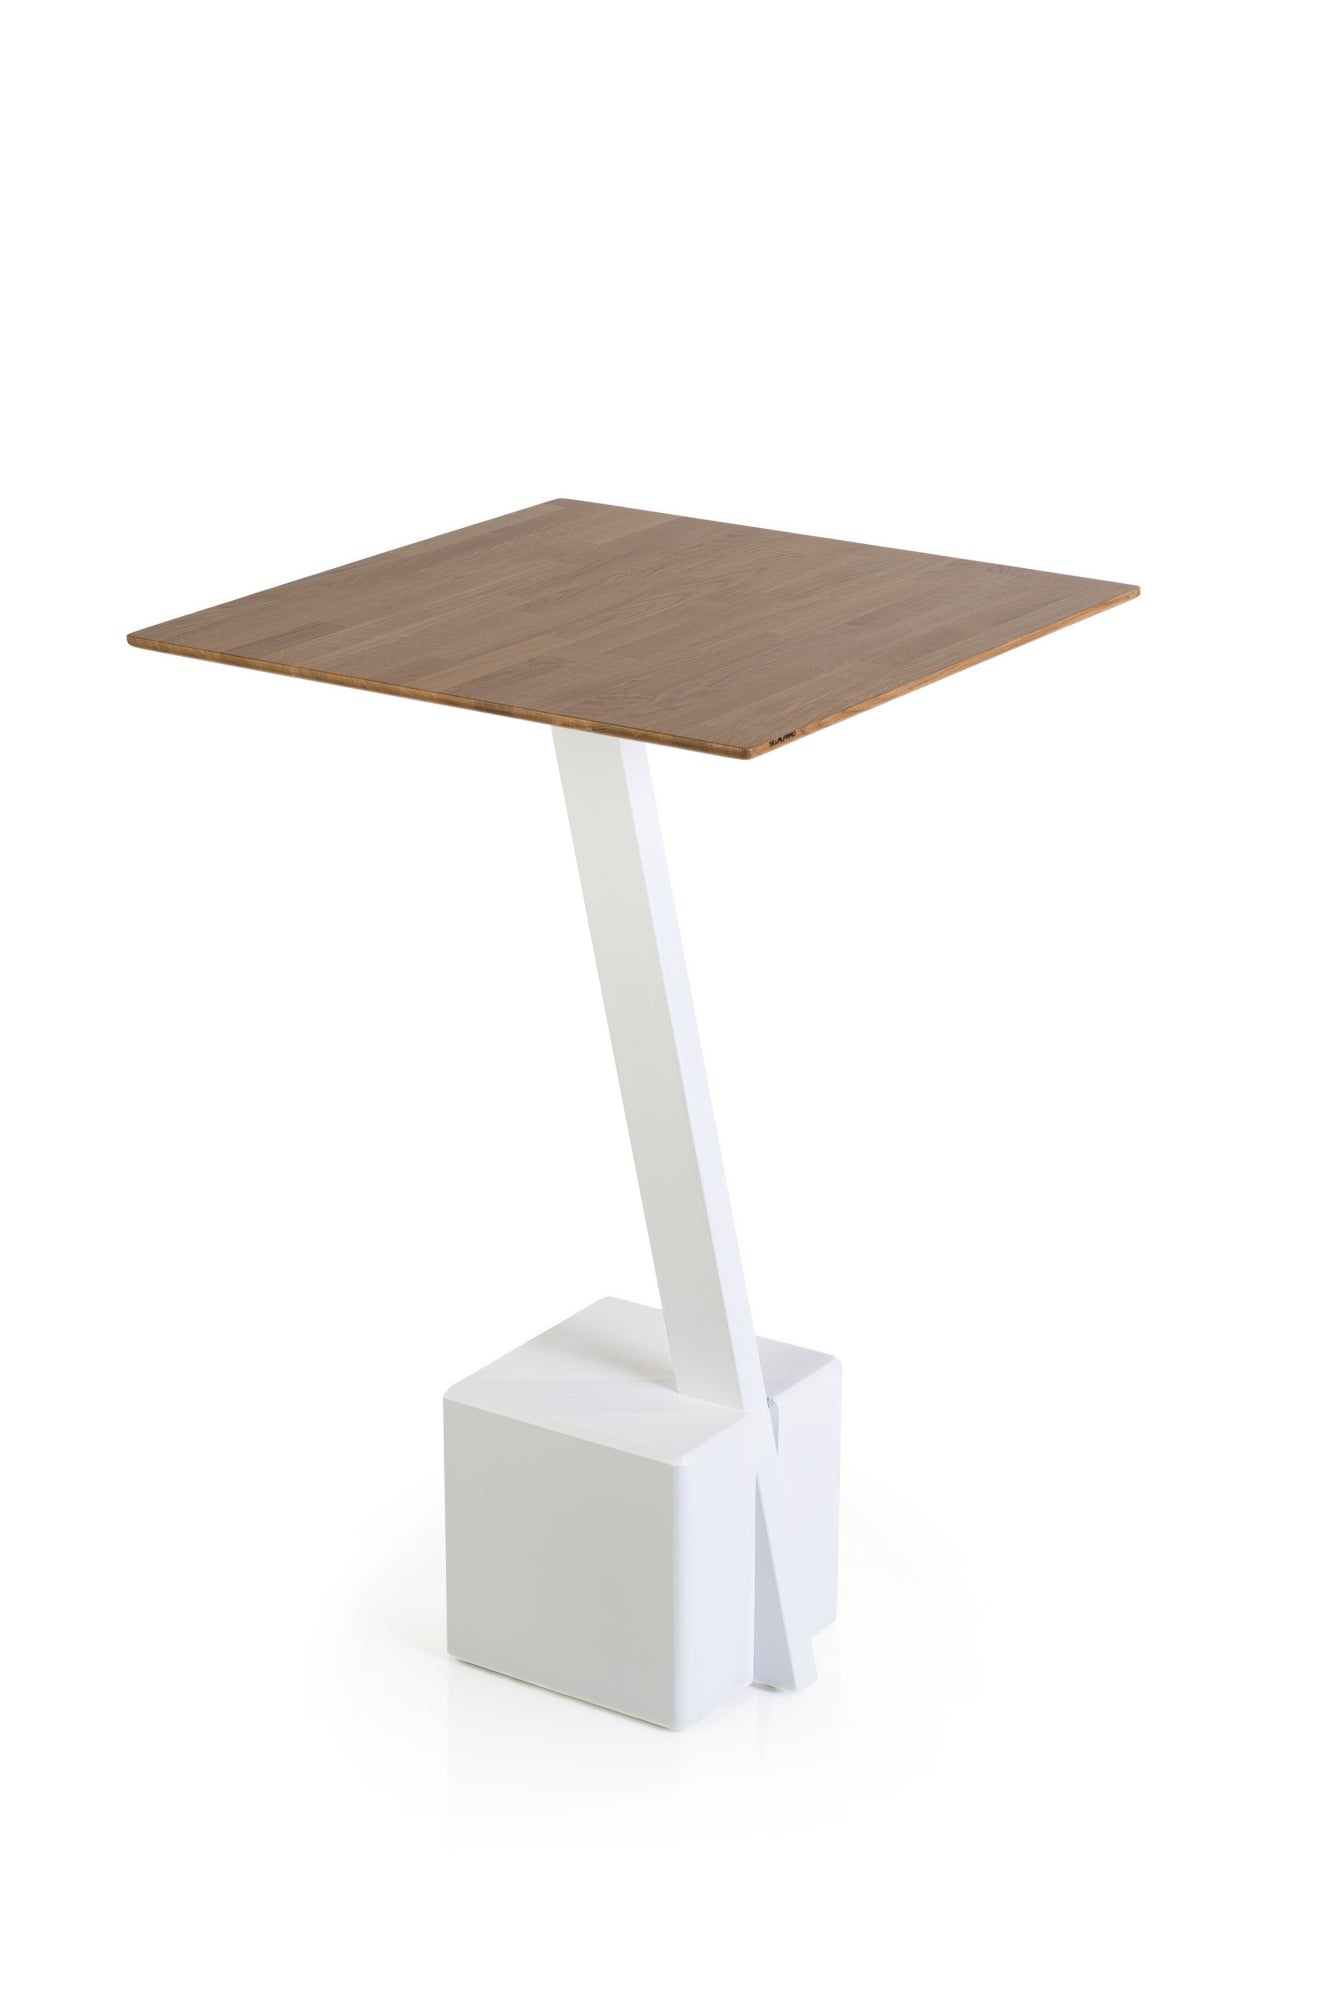 Acento Poseur Table-Sillalfaro-Contract Furniture Store